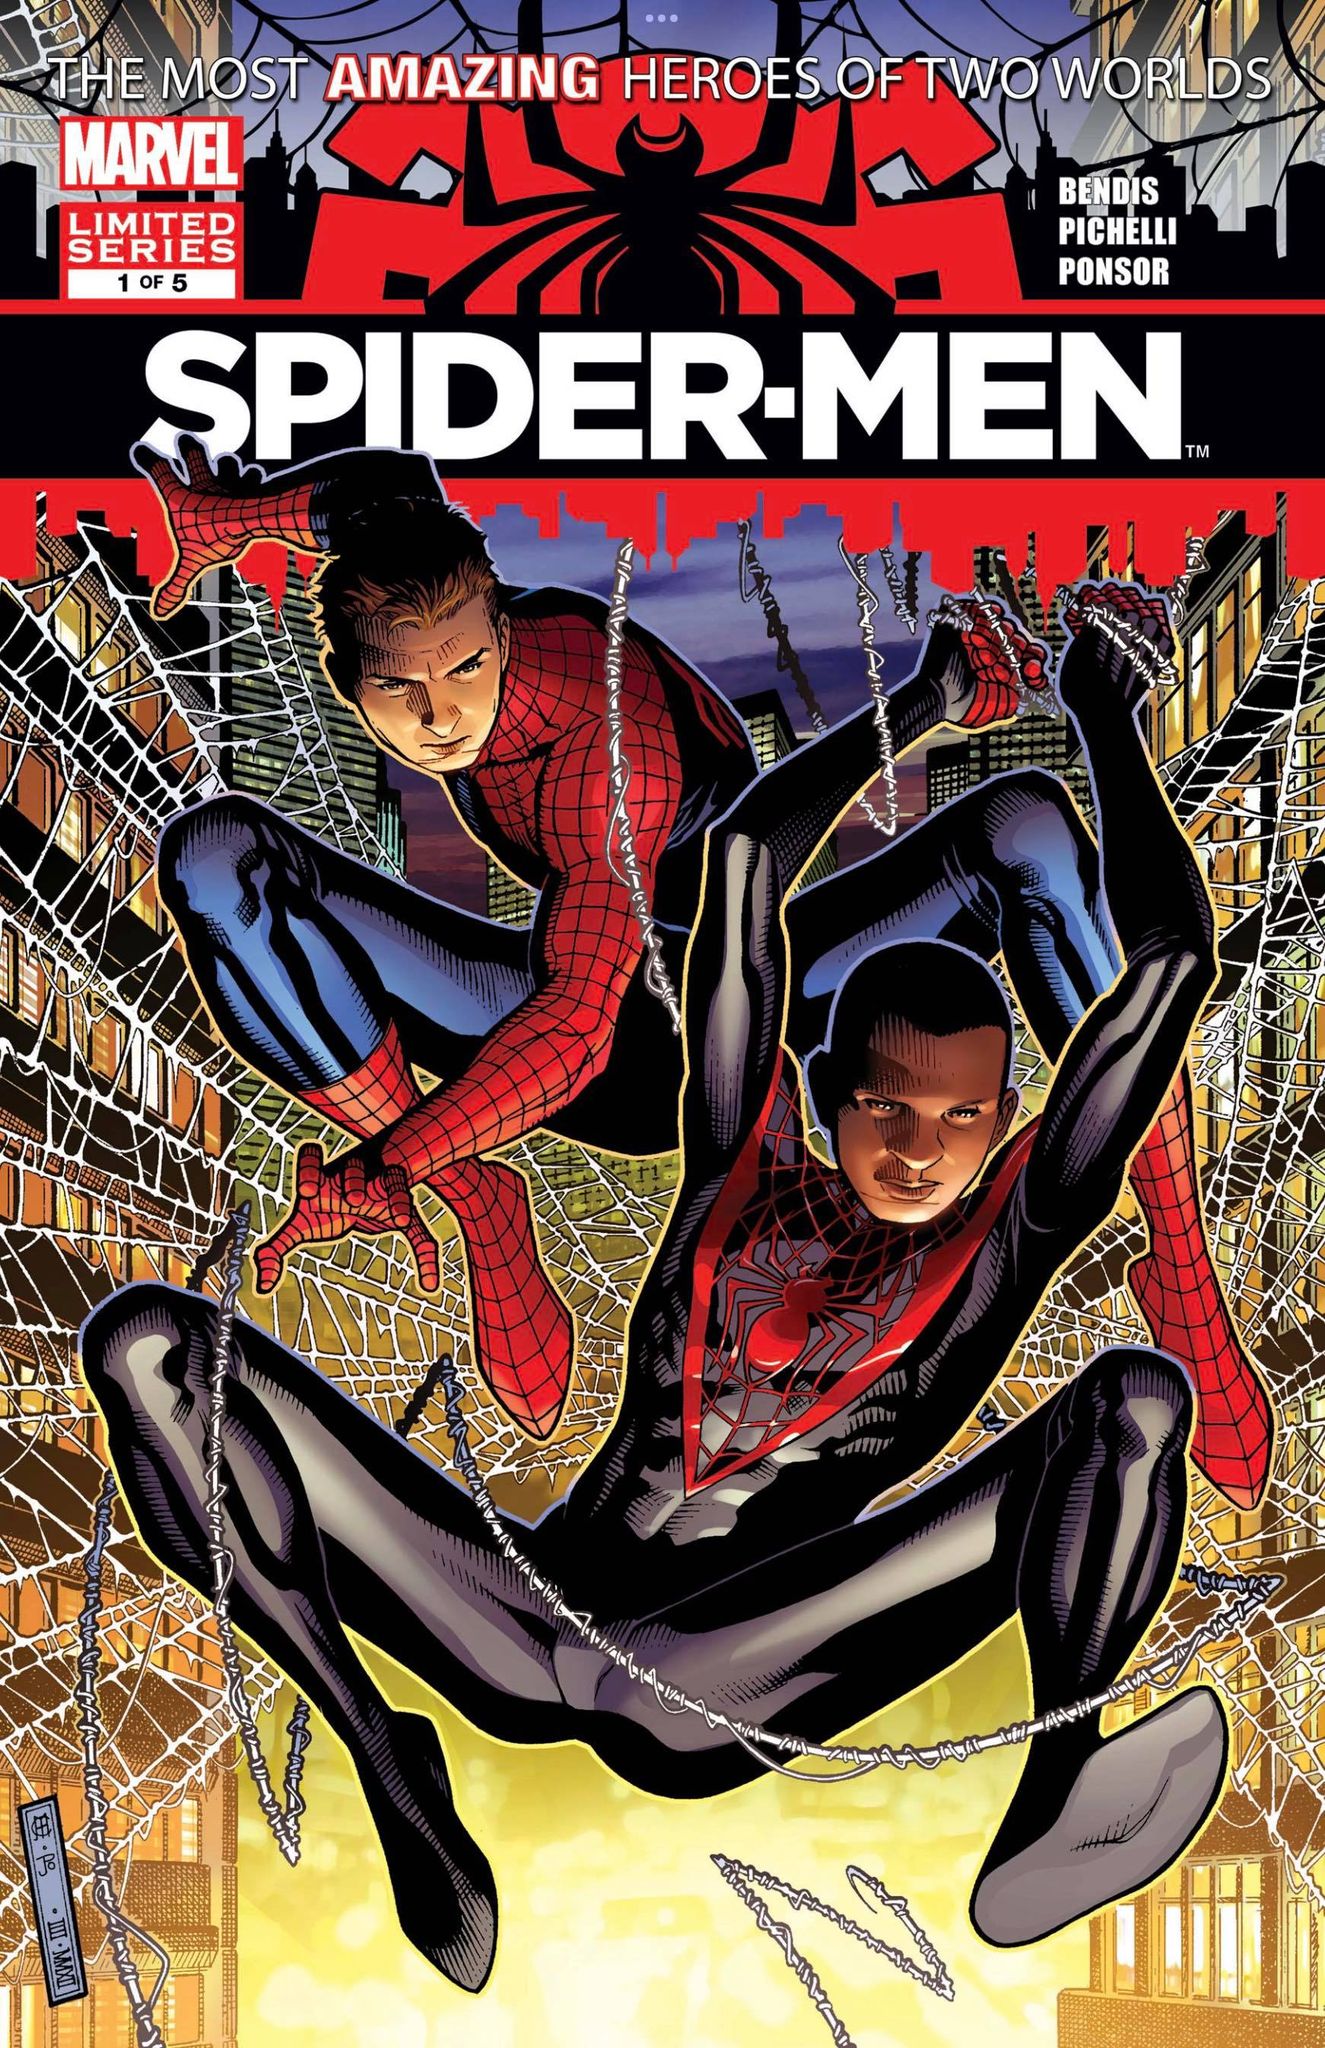 Spider-Men #1 cover